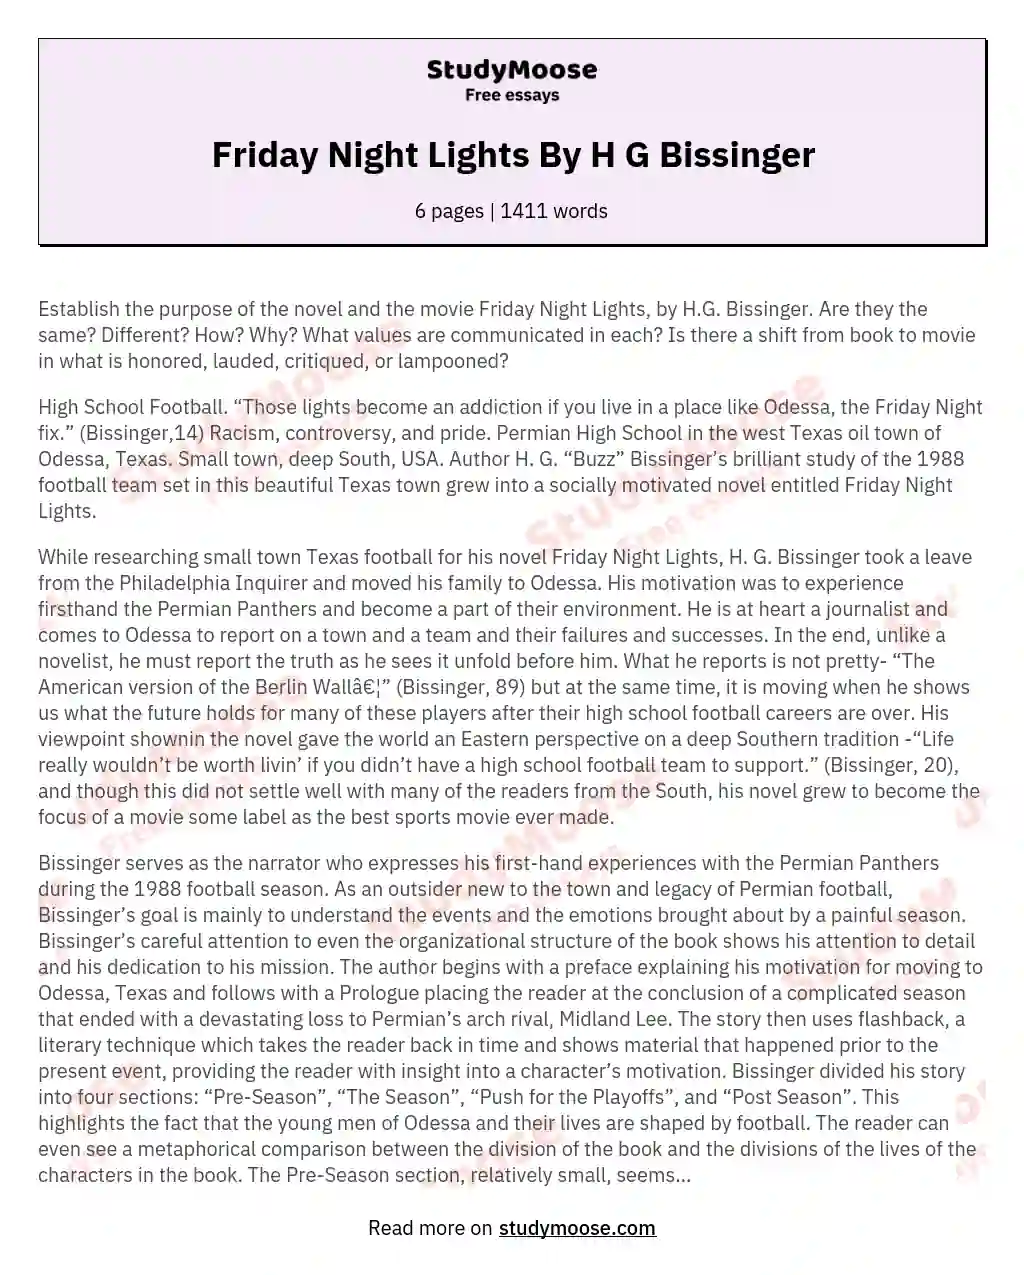 Friday Night Lights By H G Bissinger essay